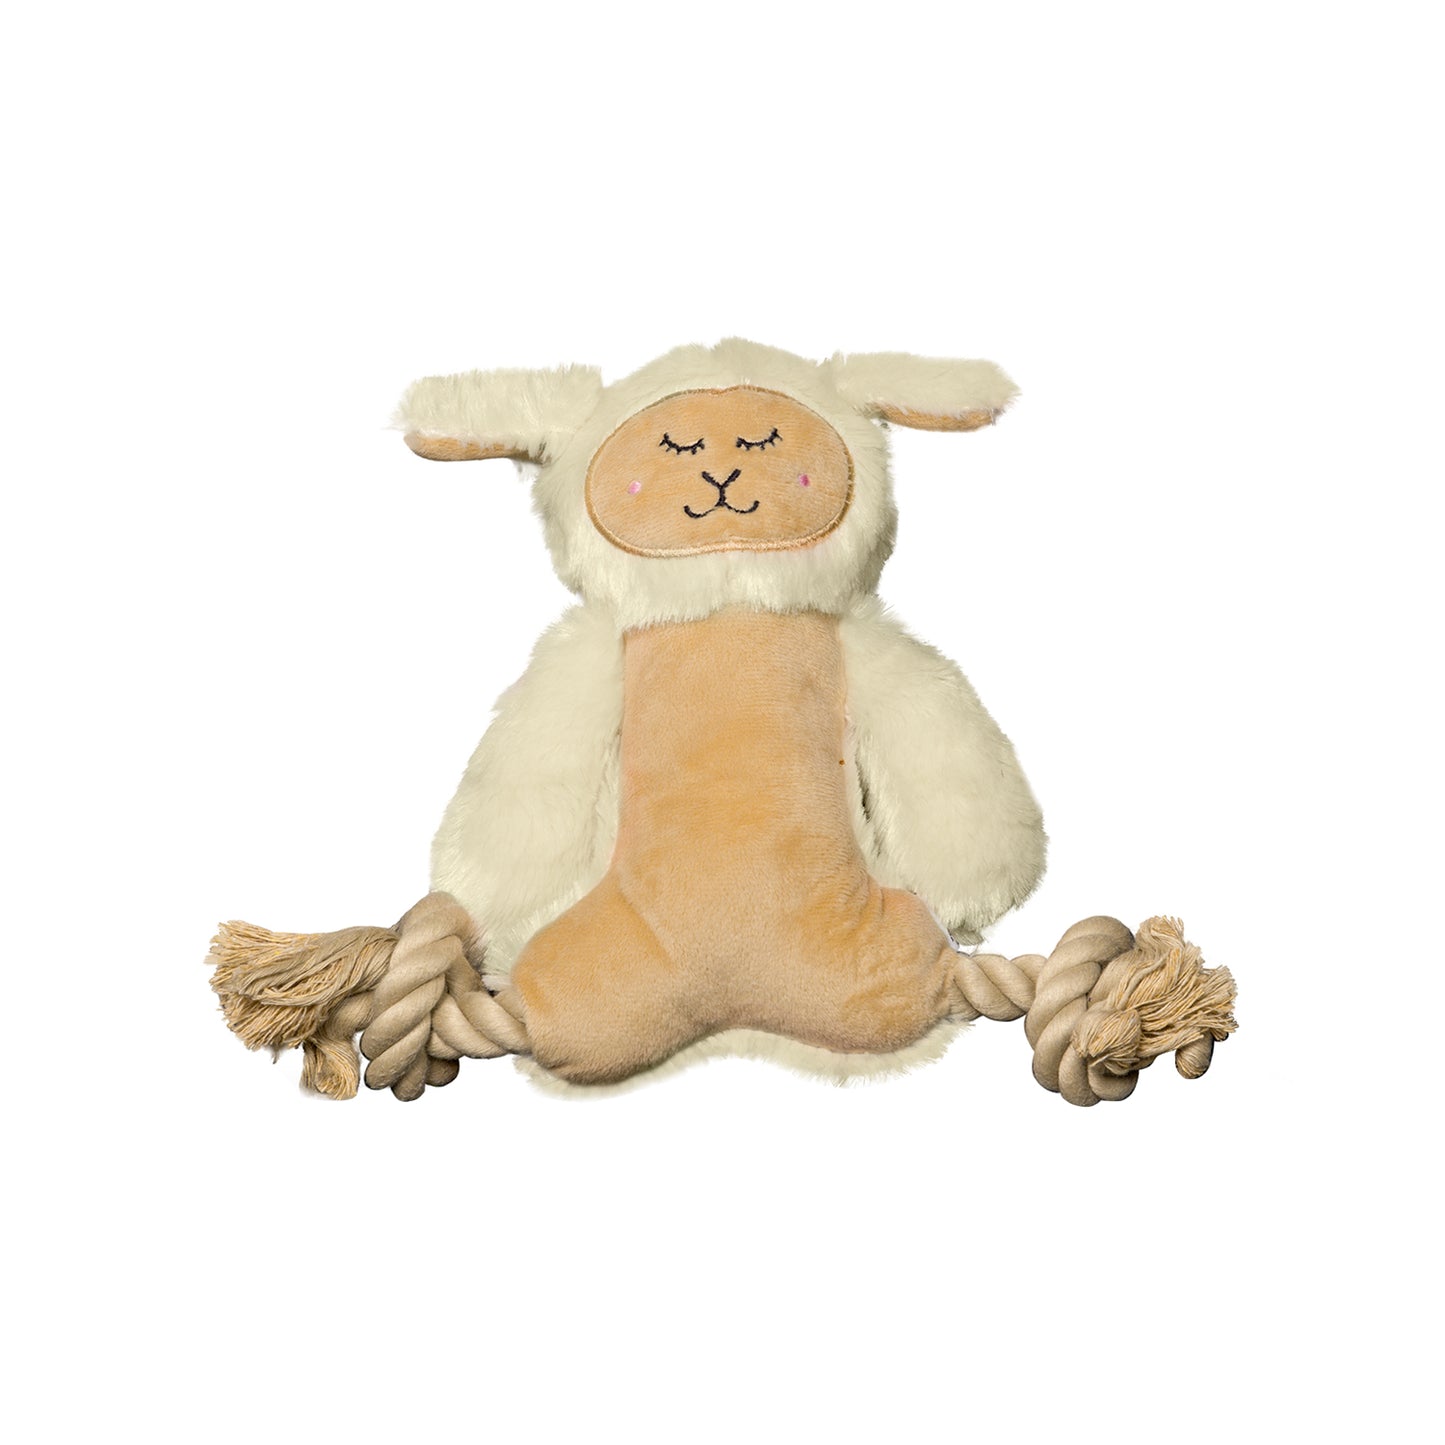 Fofos - Rope leg Plush Sheep Stuffed Soft Squeaky Plush Dog Toy